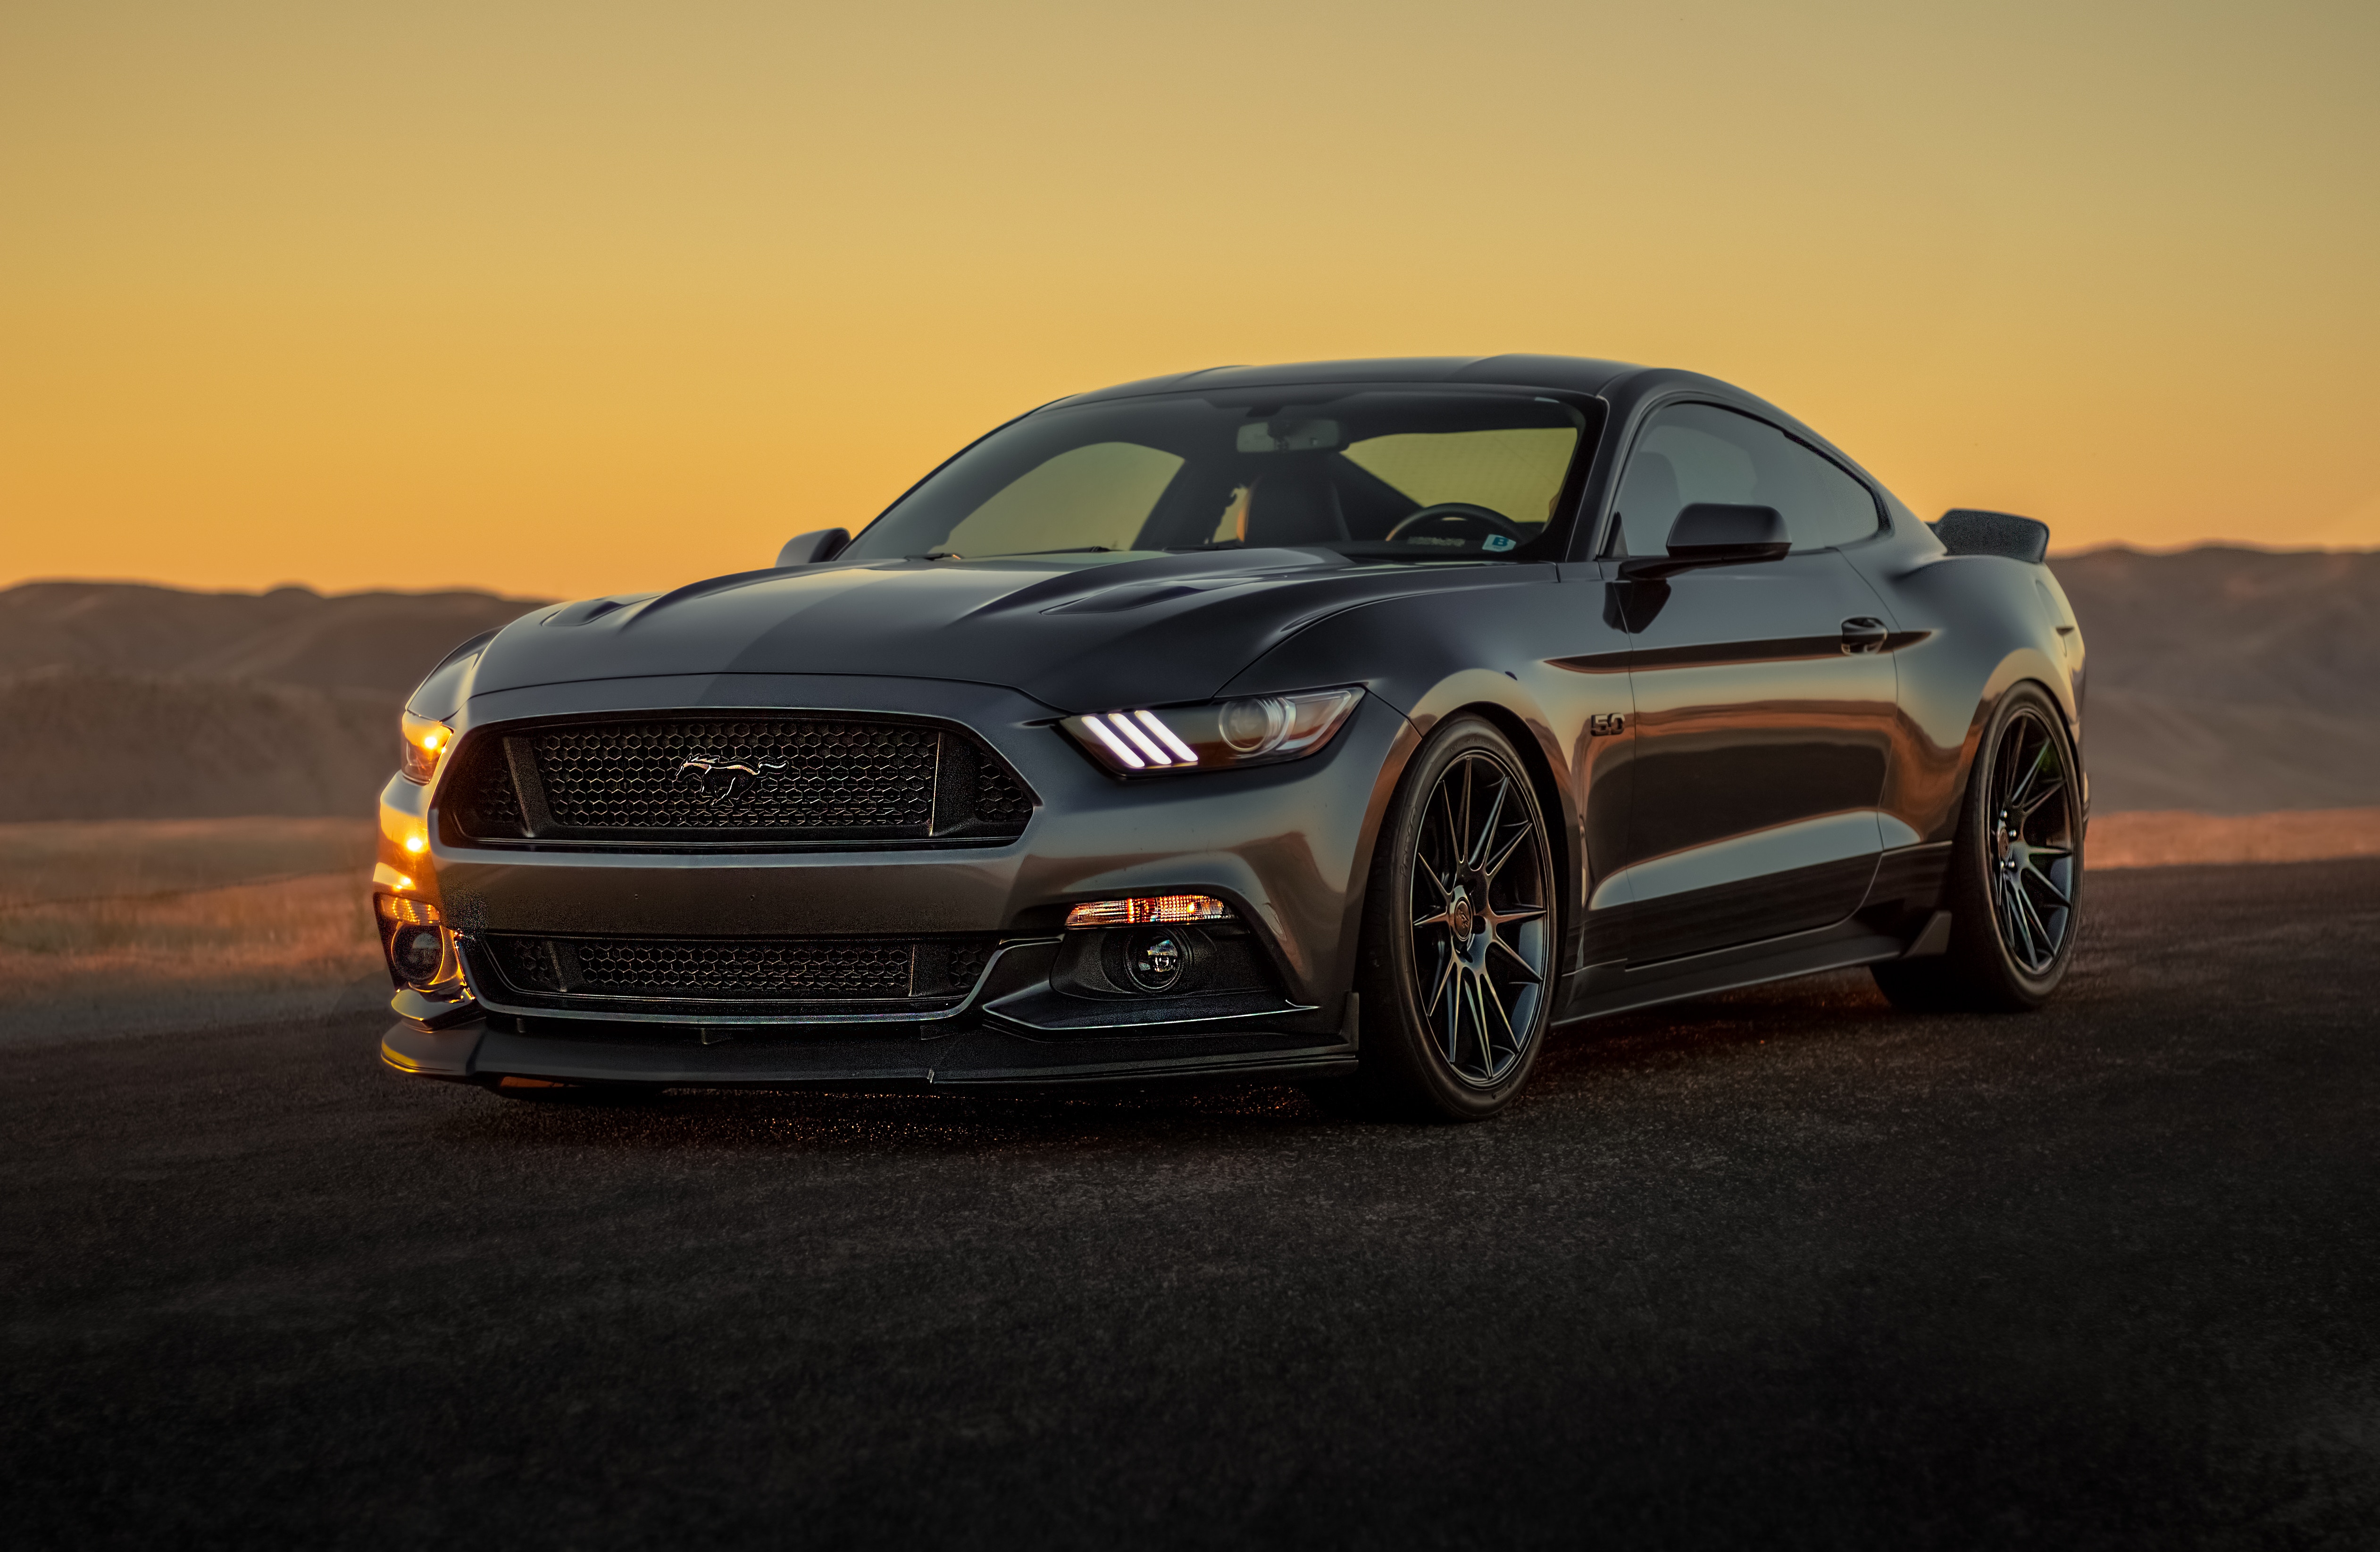 Black Ford Mustang 2019 5k, HD Cars, 4k Wallpapers, Image